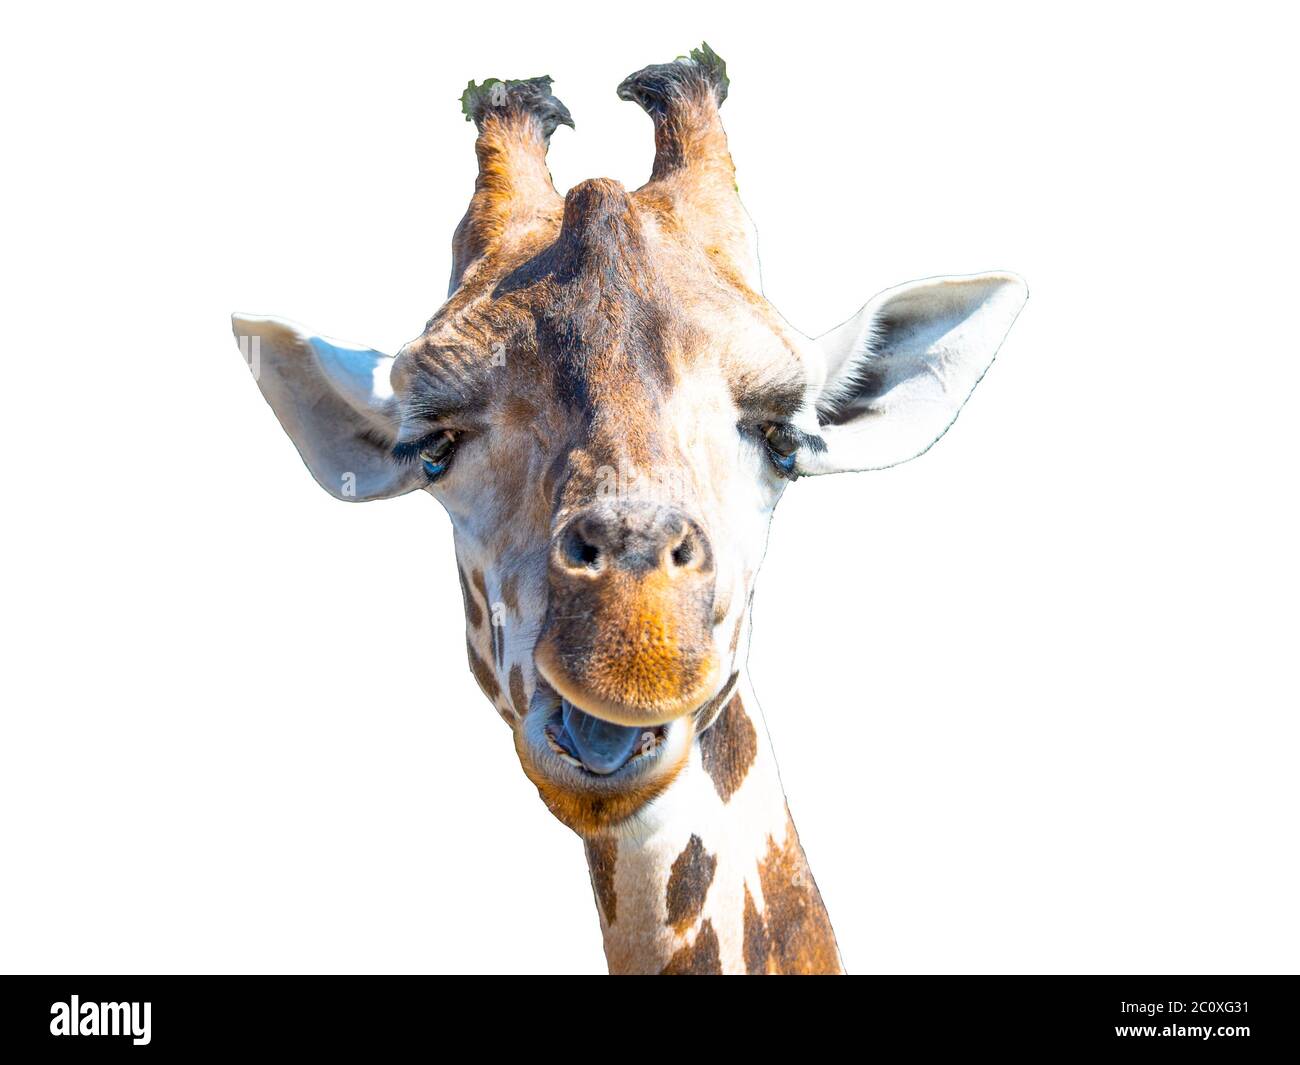 Giraffe head isolated on white background. Wild animal portrait. Stock Photo